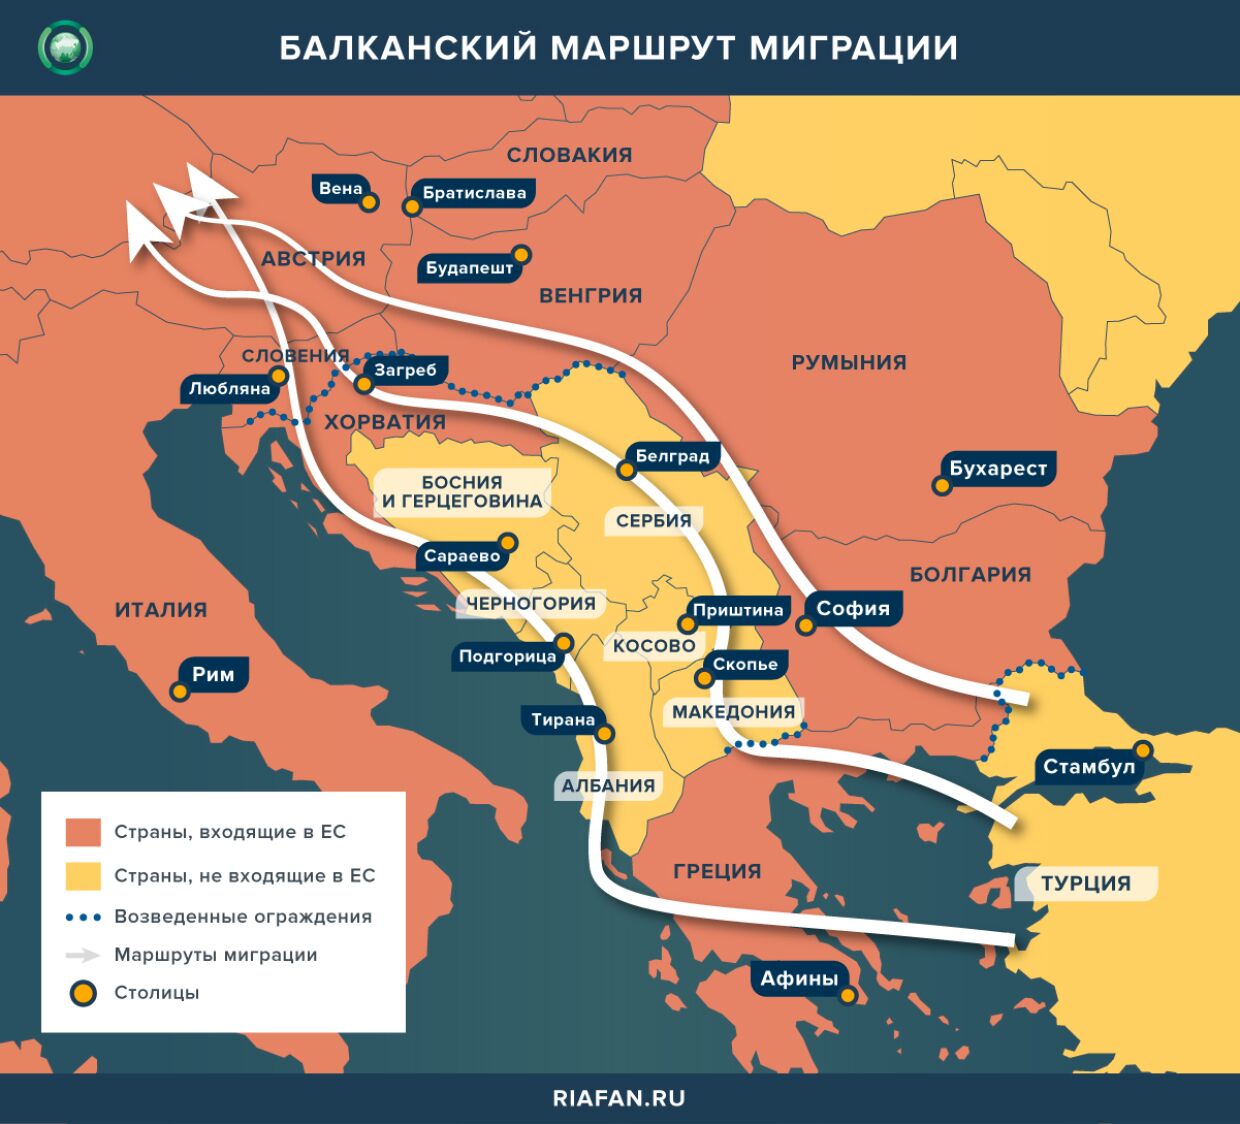 Балканский маршрут миграции. 